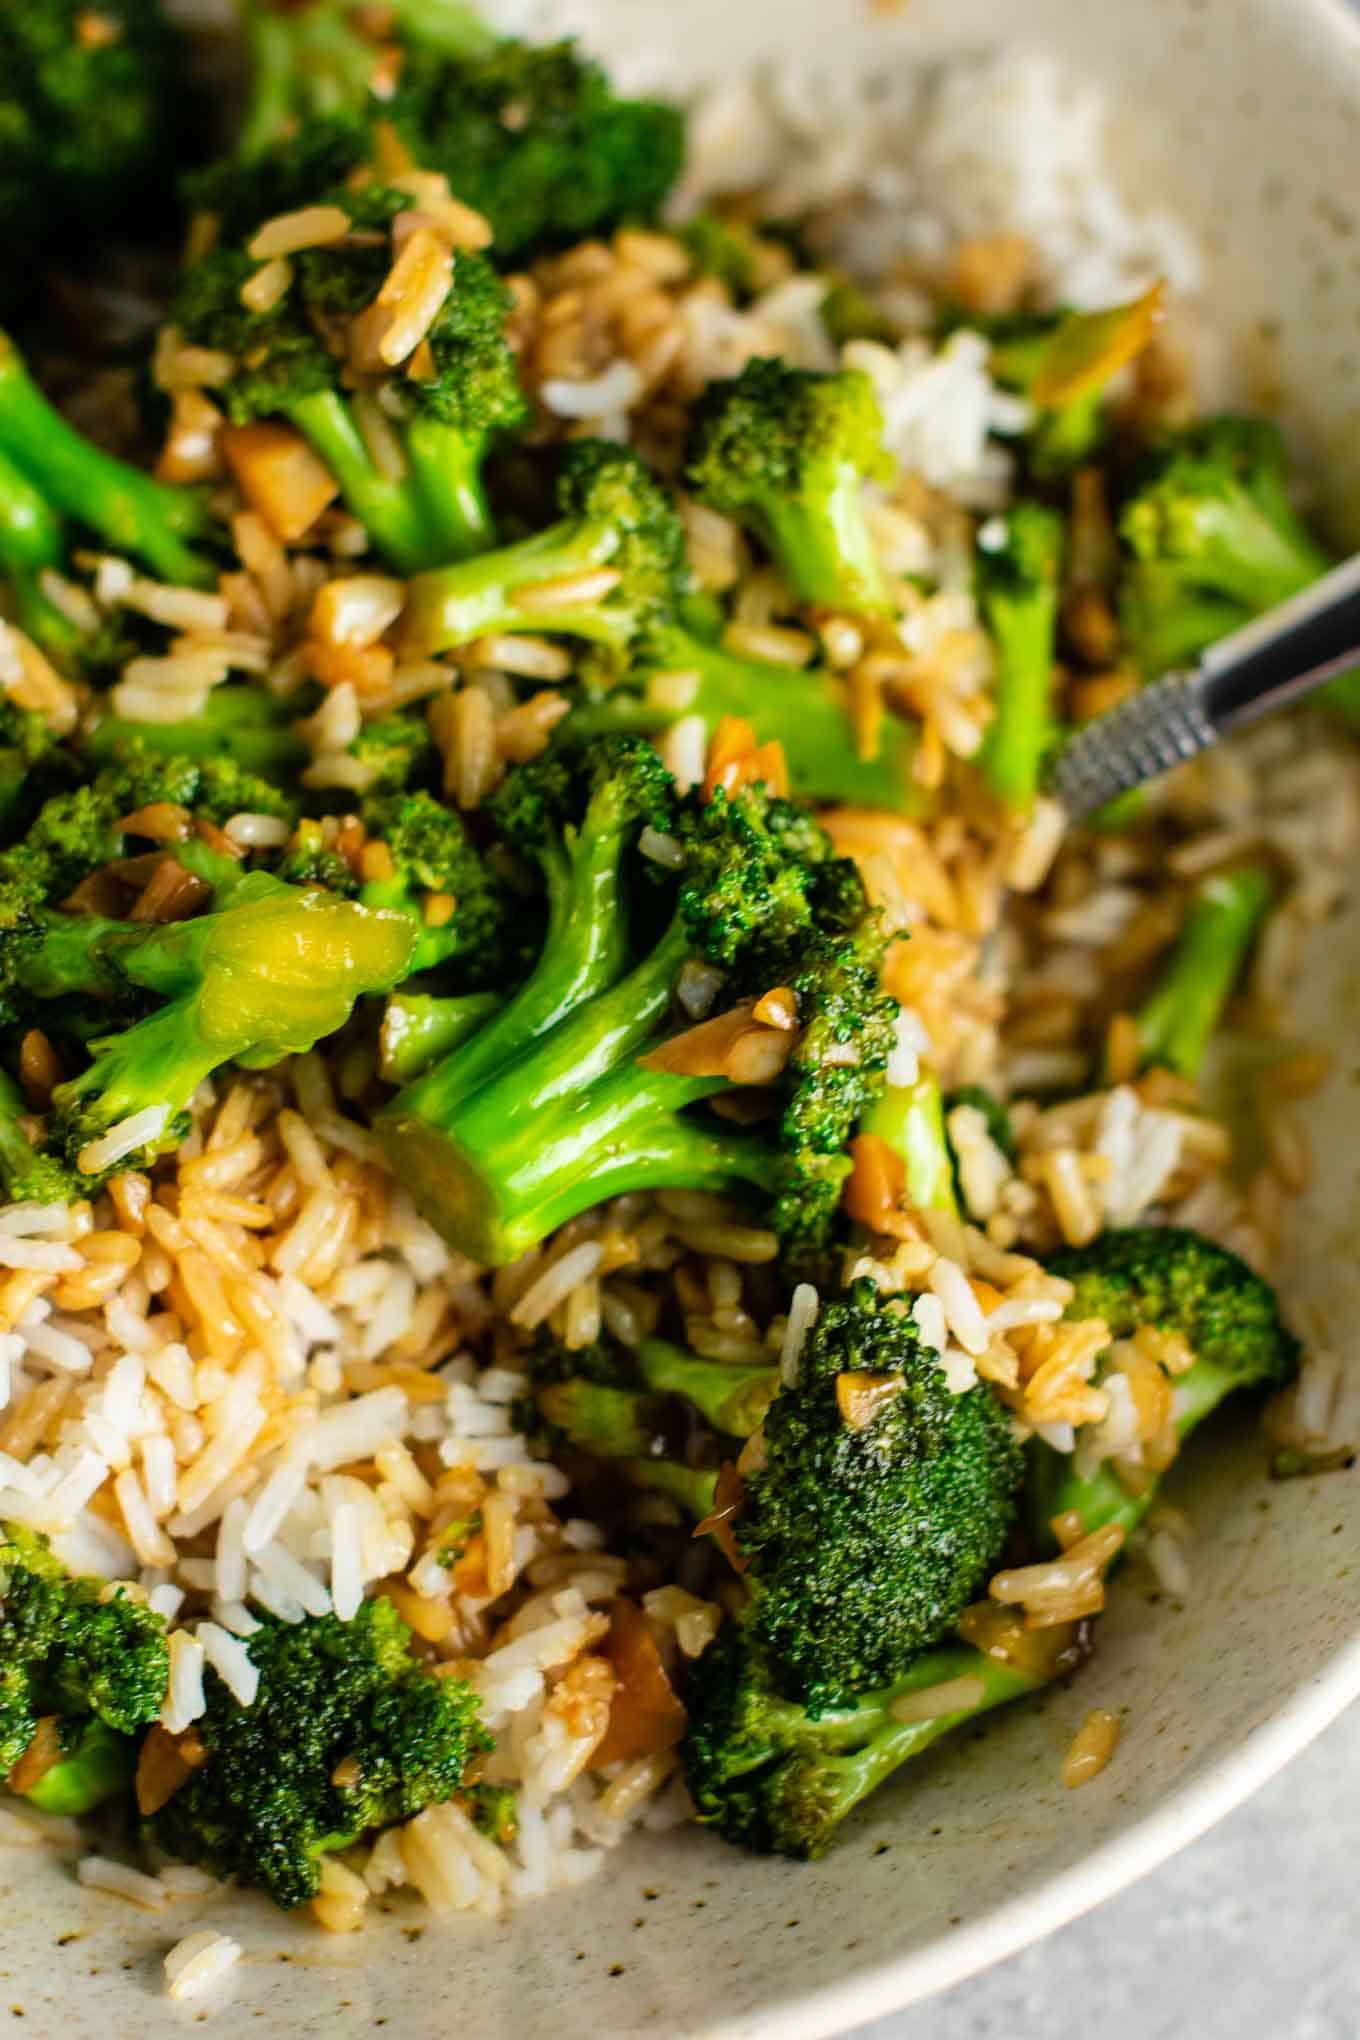  Chinese broccoli with garlic sauce recipe